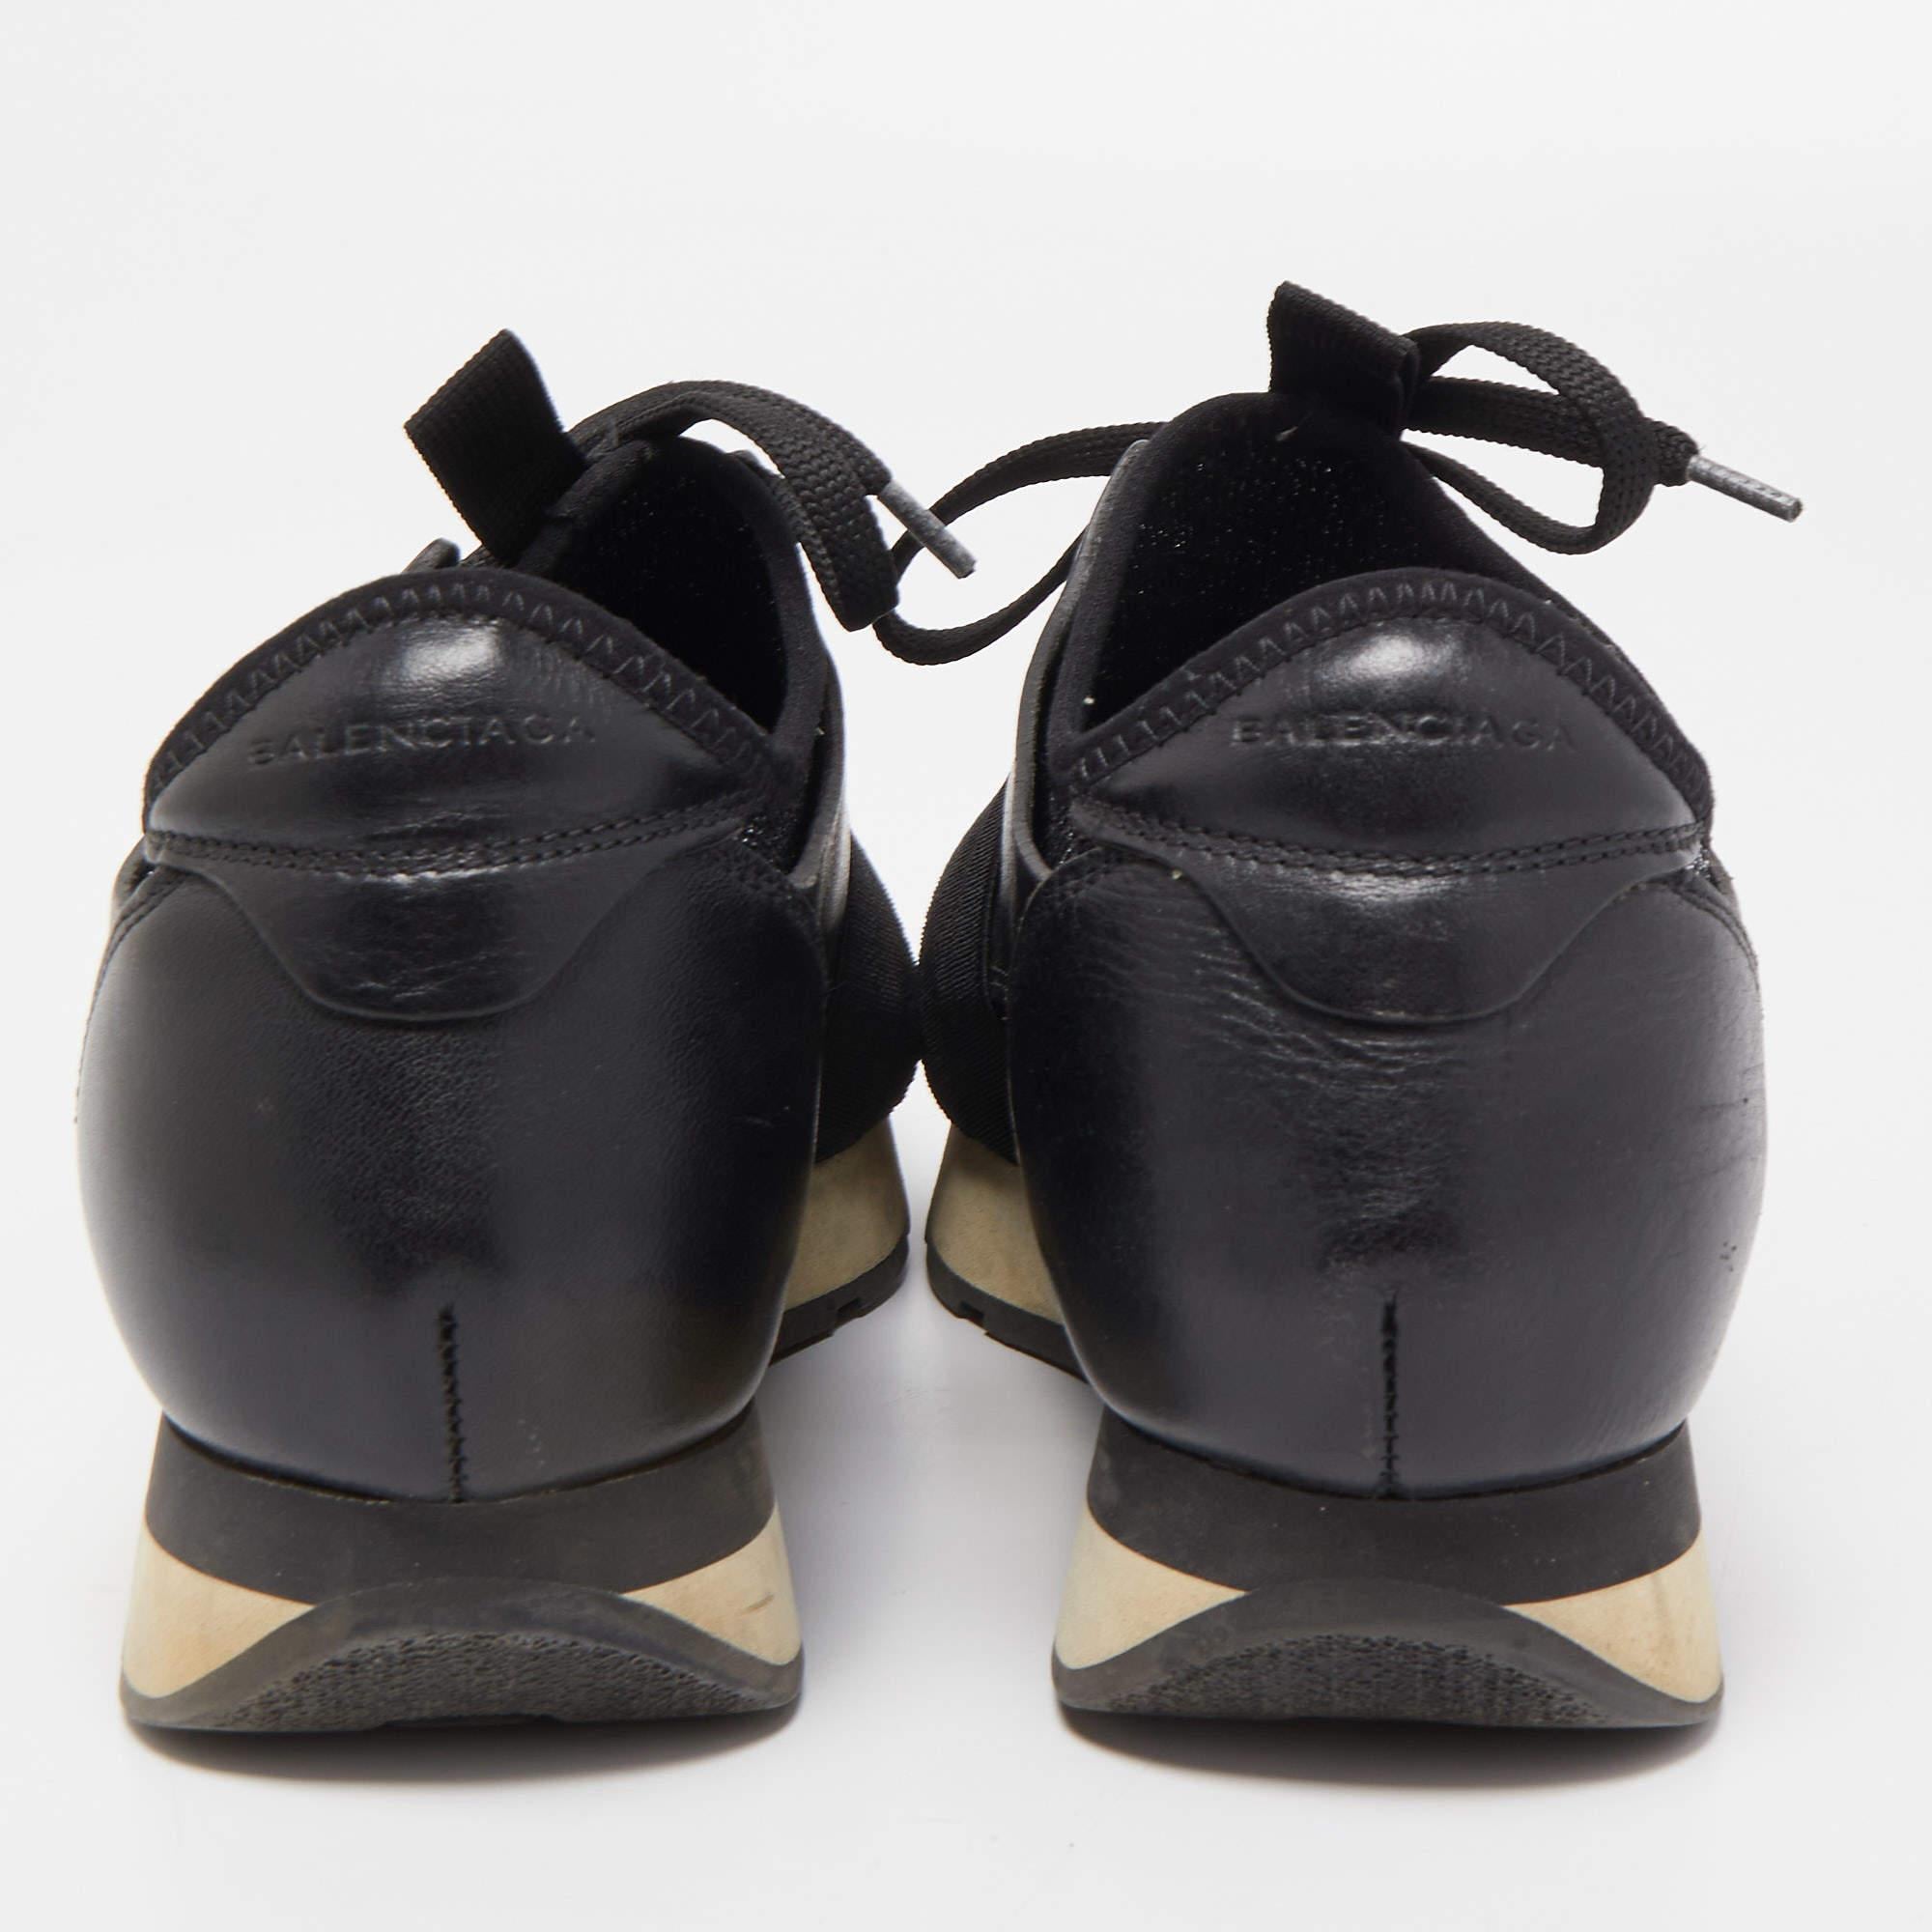 Balenciaga Black Leather and Metallic Fabric Race Runner Sneakers Size 37 In Good Condition For Sale In Dubai, Al Qouz 2